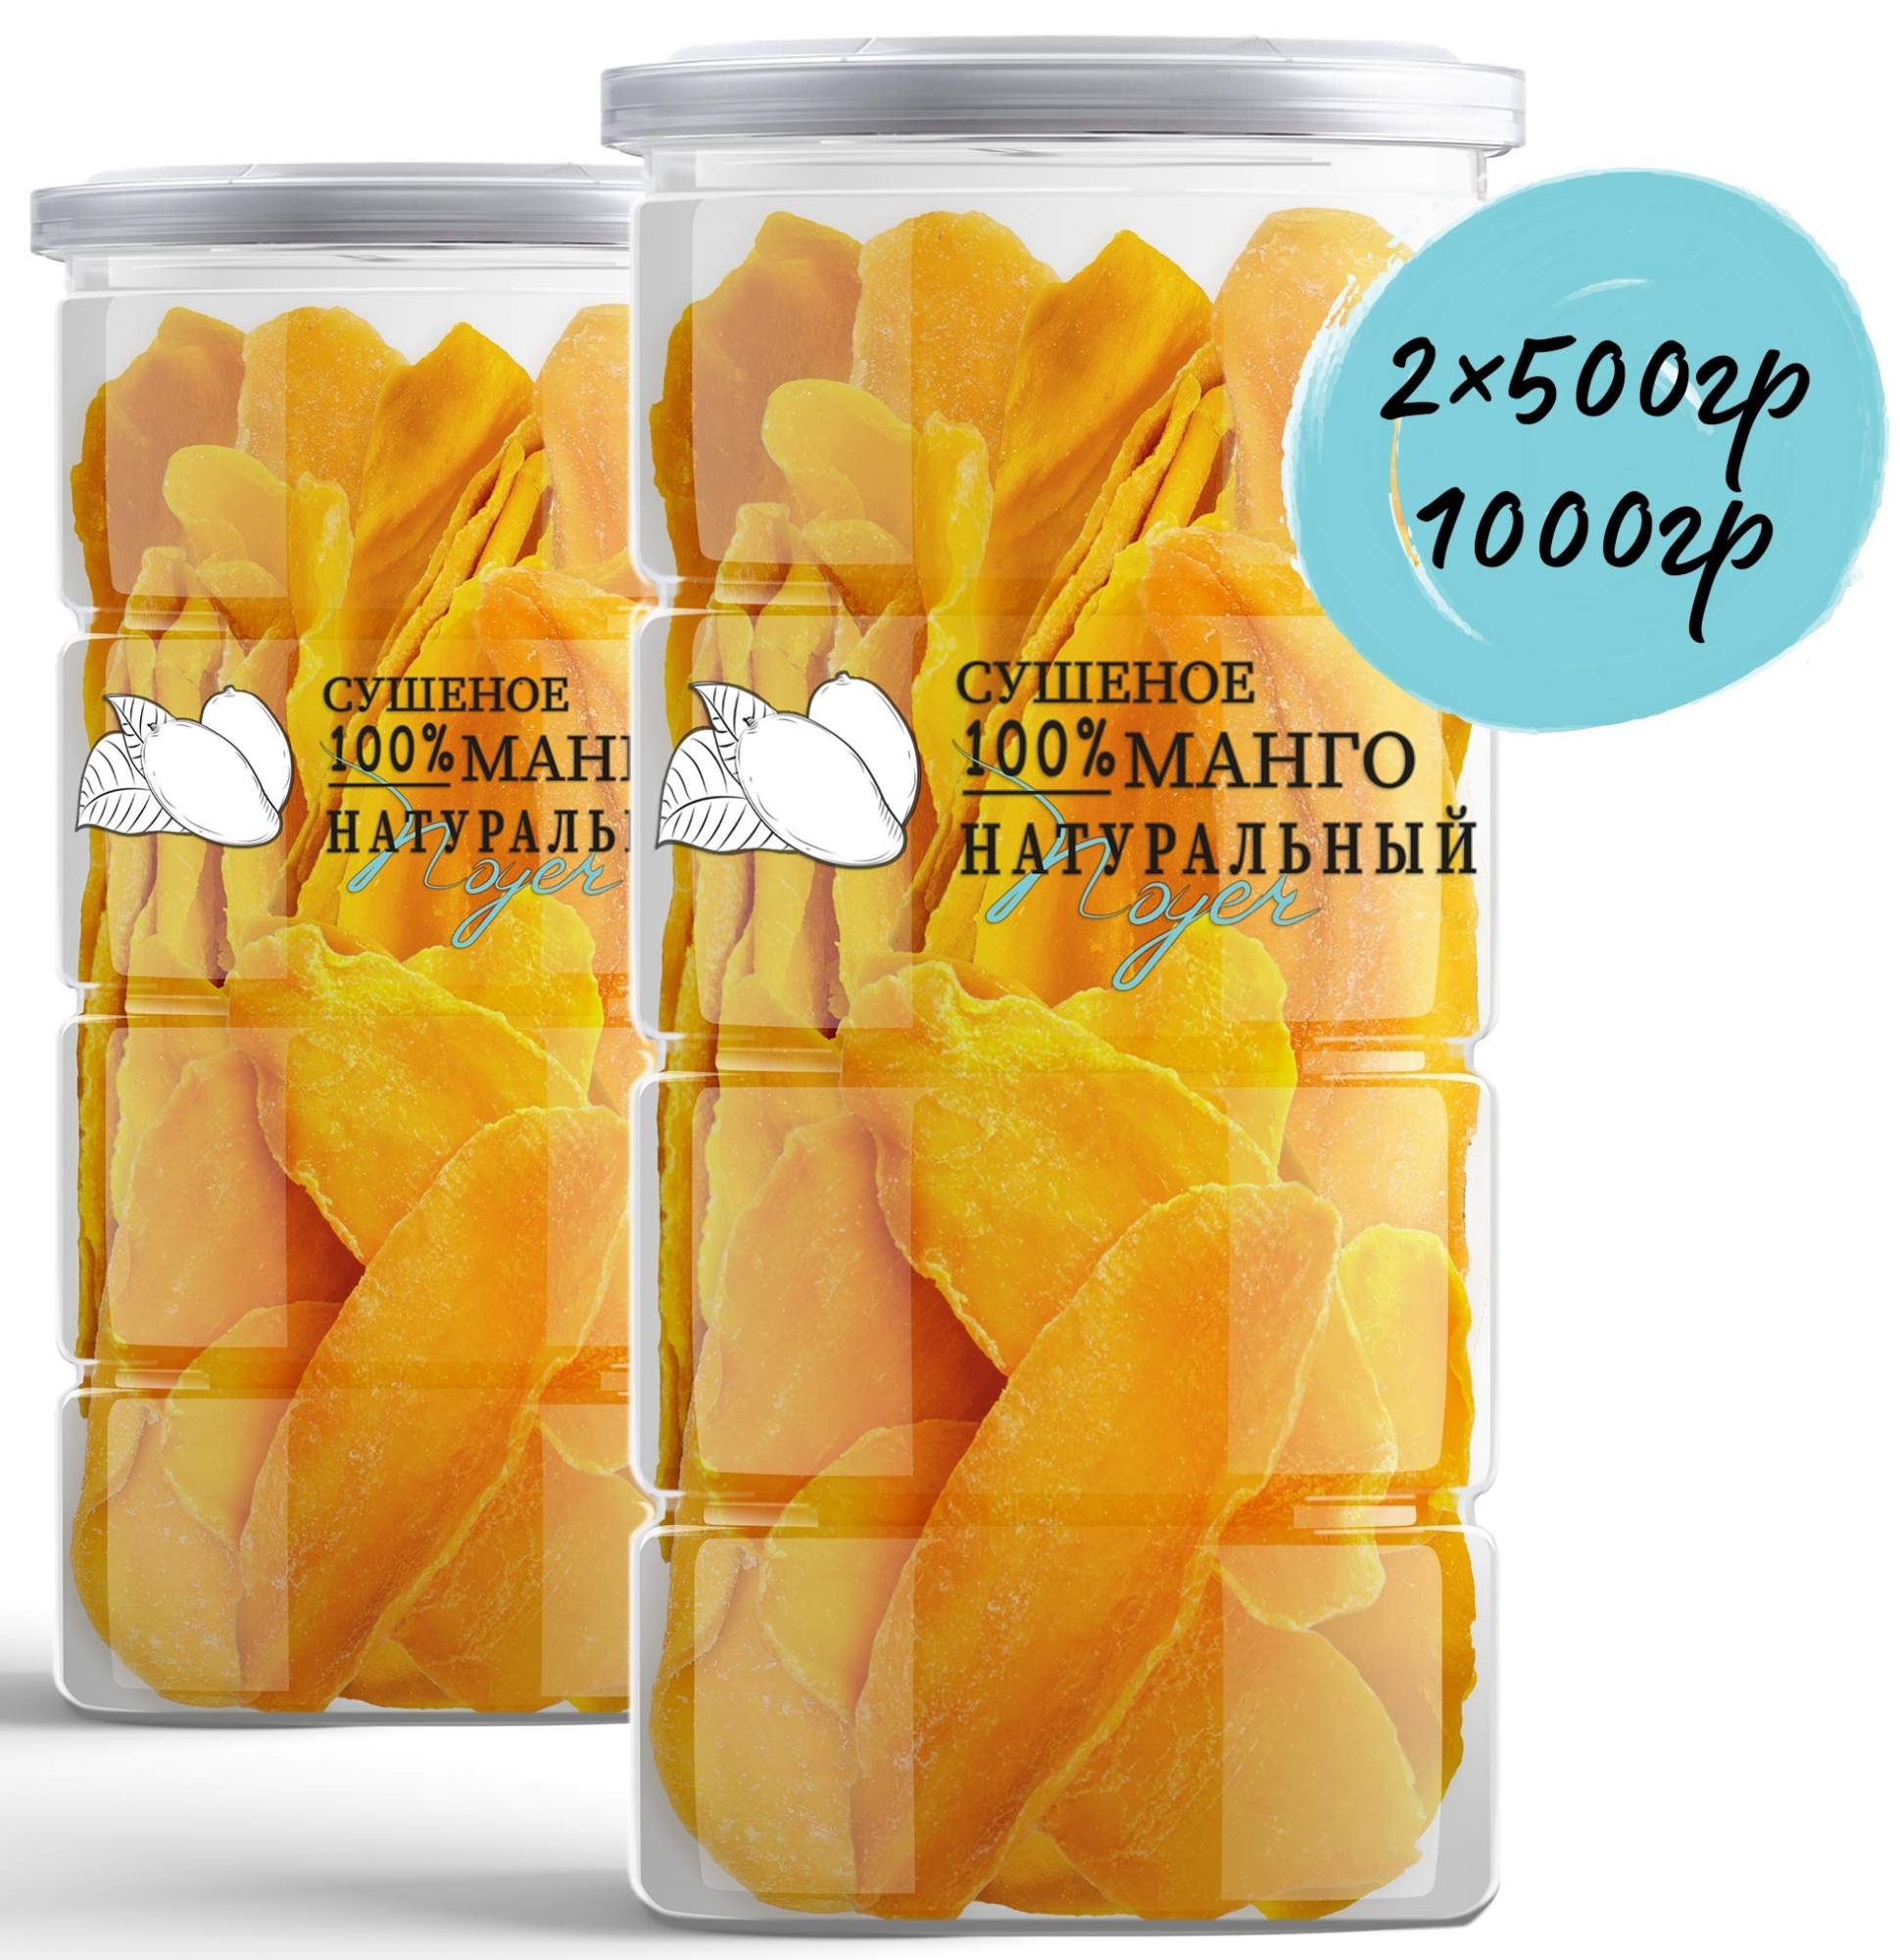 Купить манго сушеный натуральный NOYER без сахара, без консервантов, 2 шт х 500 г, цены на Мегамаркет | Артикул: 600014833243